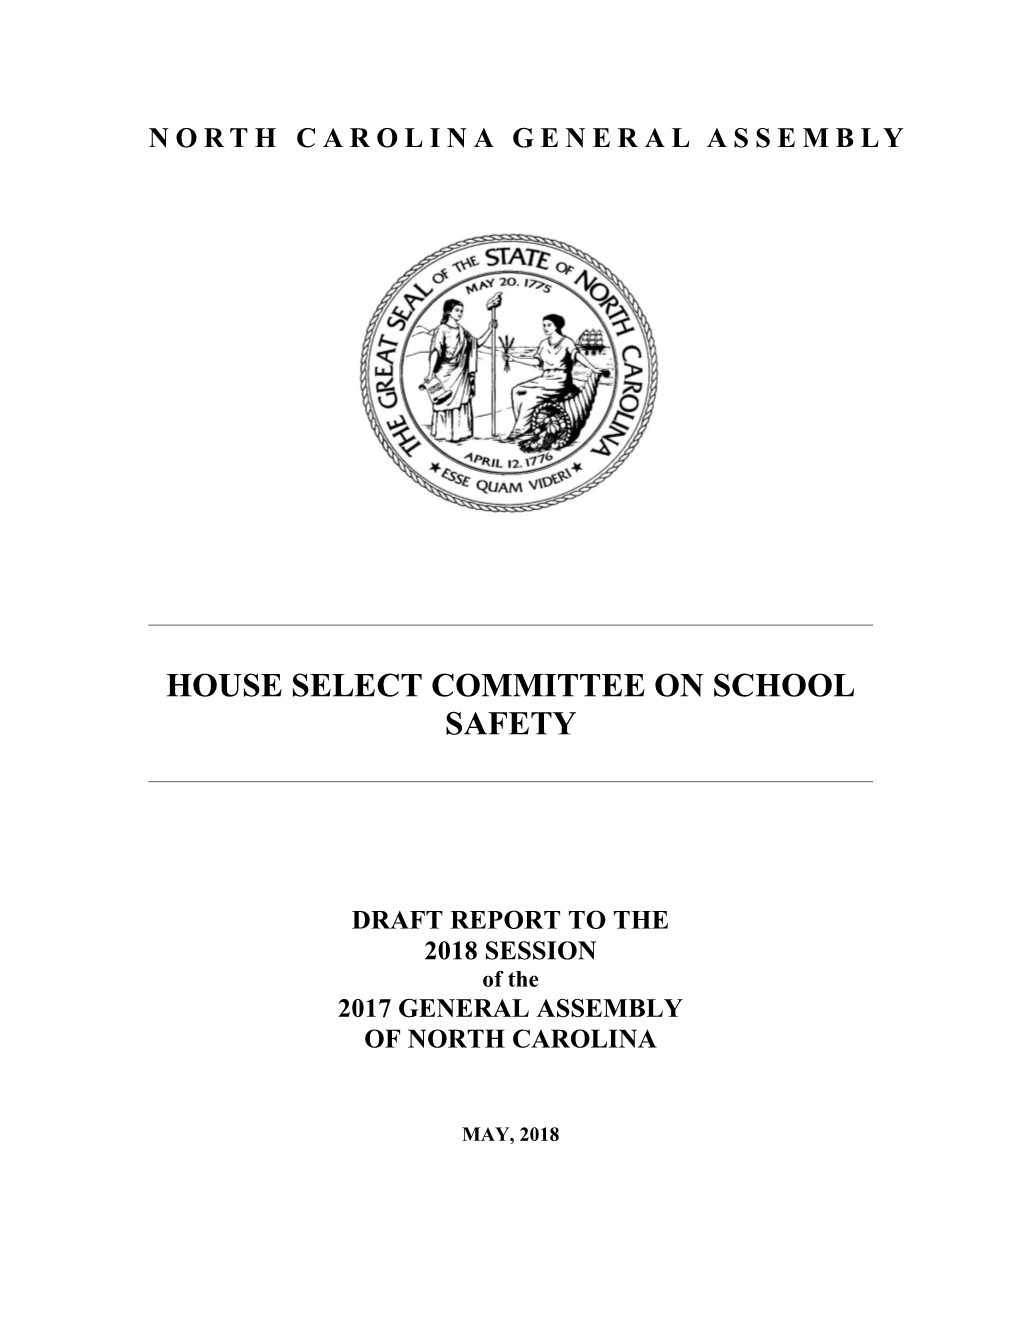 Draft Committee Report